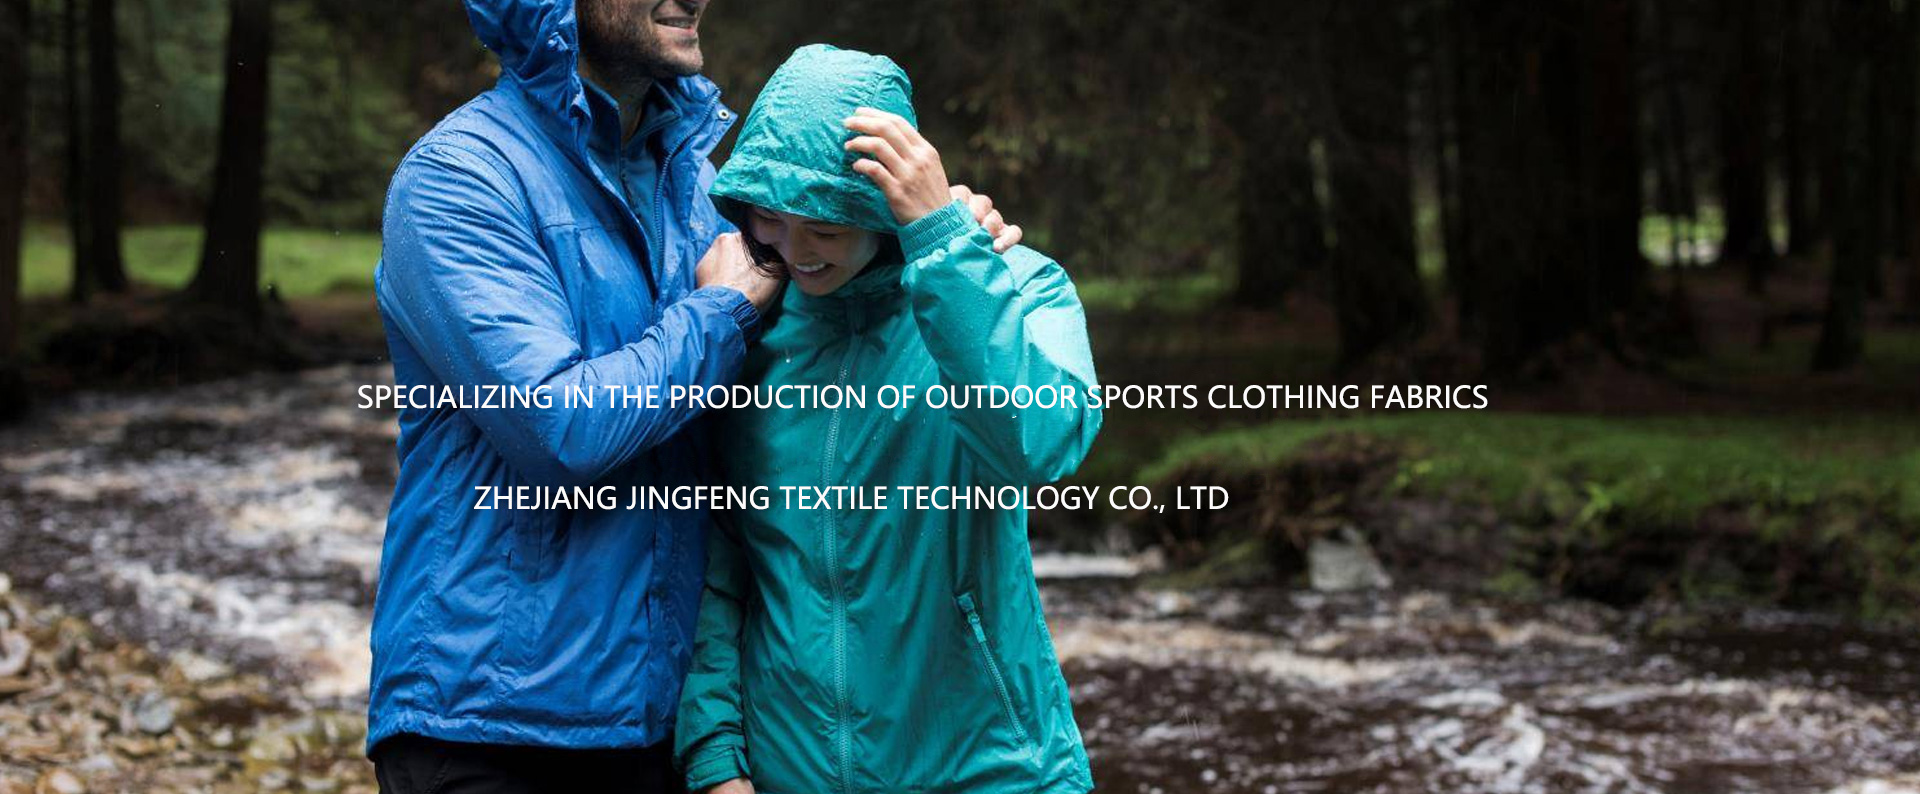 Zhejiang Jingfeng Textile Technology Co., Ltd